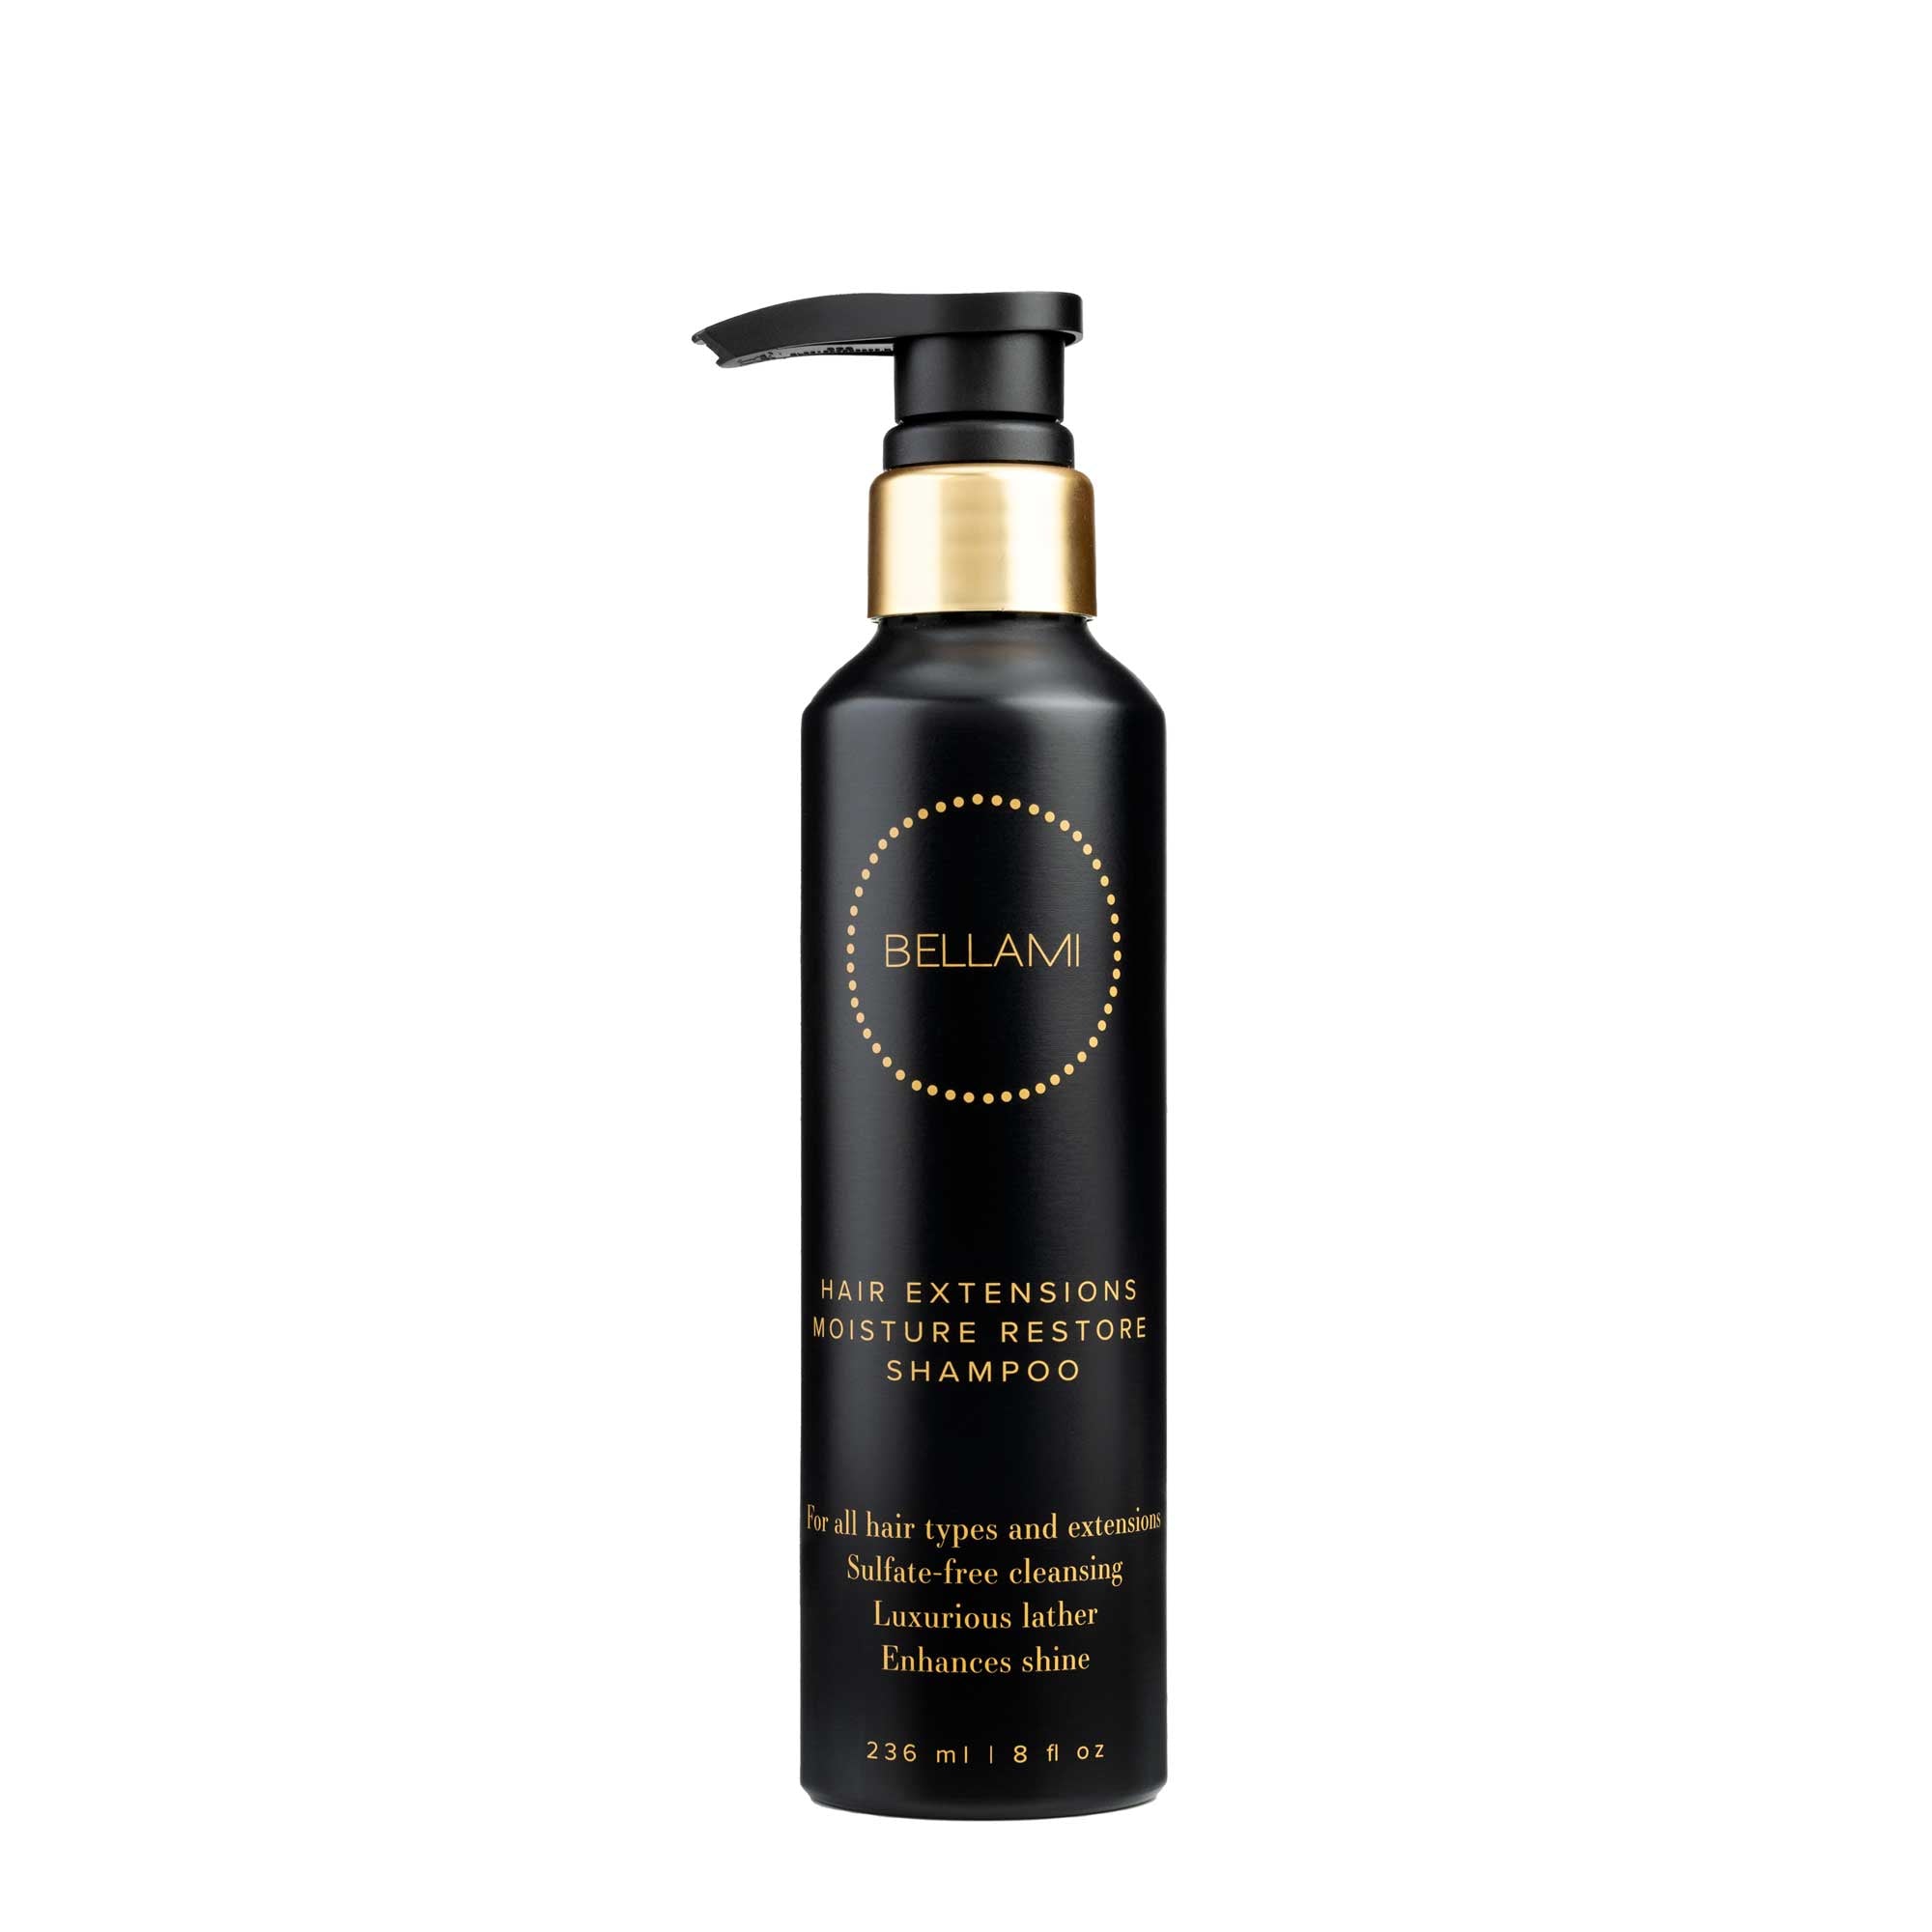 BELLAMI Hair Extensions Moisture Restore Shampoo